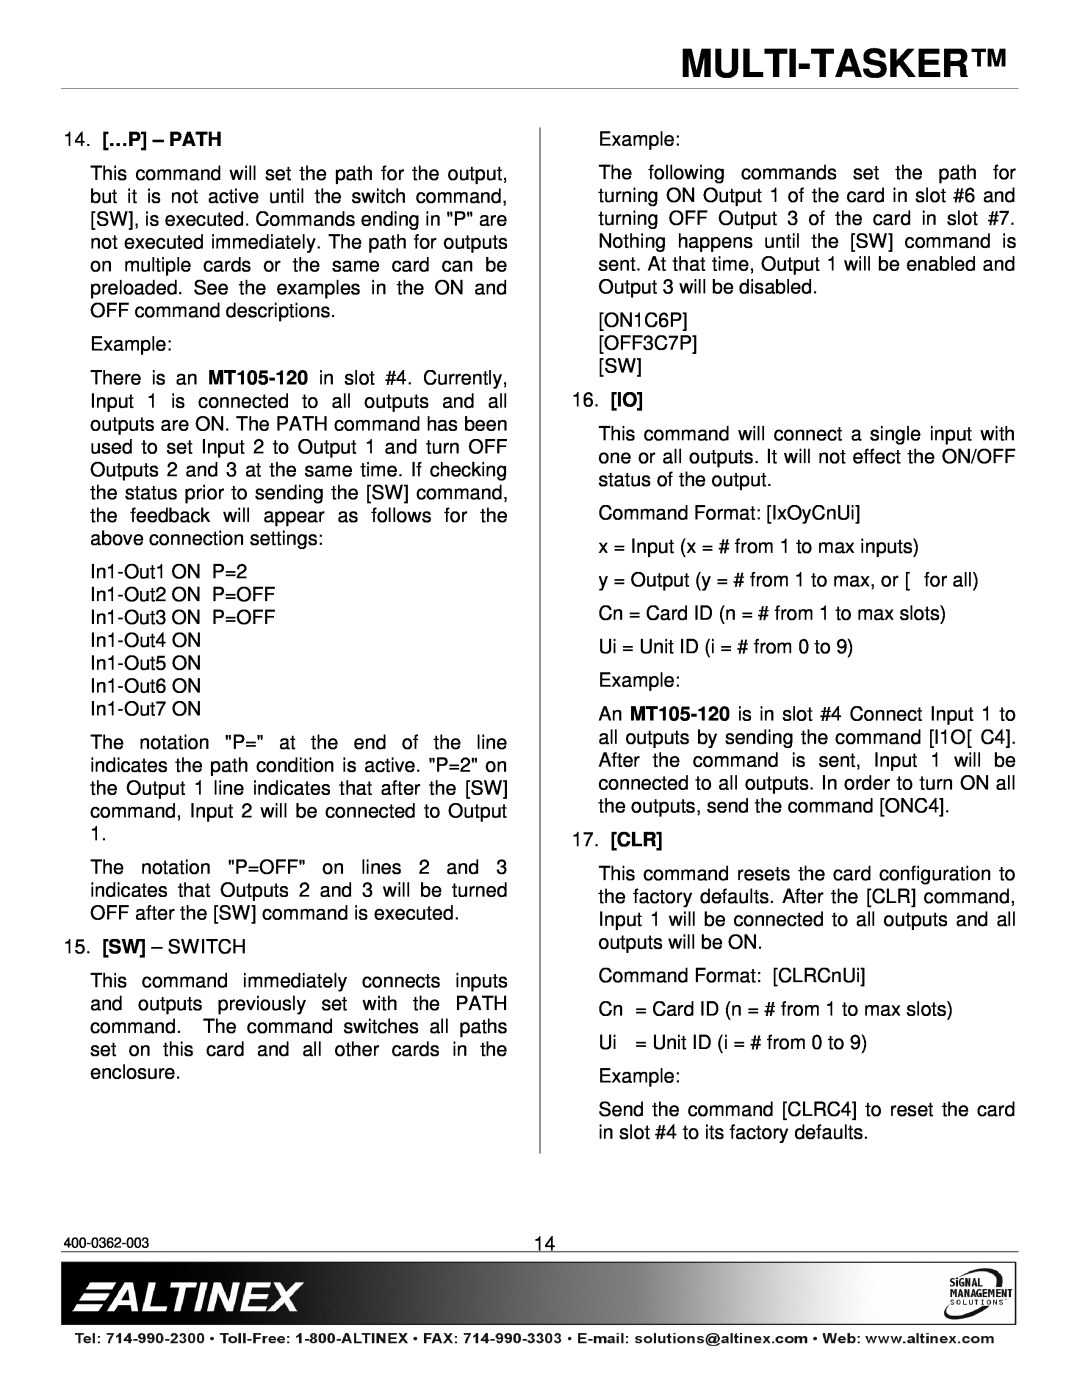 Altinex MT105-120/121 manual 14. …P - PATH, 16. IO, Clr, Multi-Tasker 